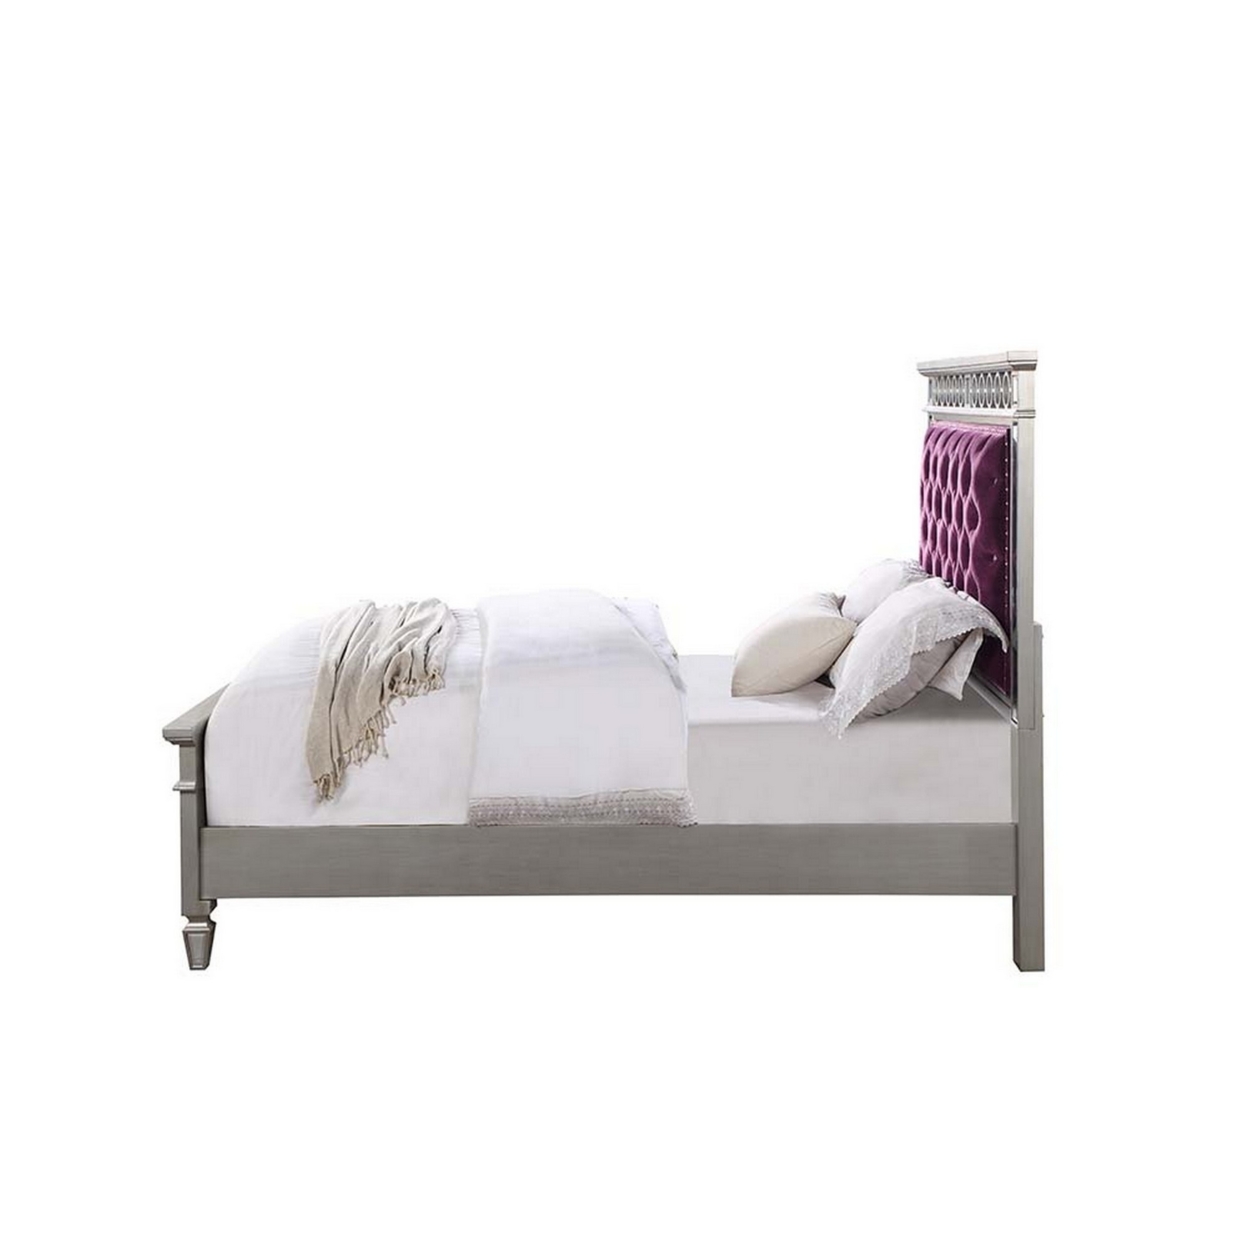 Eira Tufted Twin Size Bed, Burgundy Velvet Upholstery, Elegant Mirror Inlay- Saltoro Sherpi